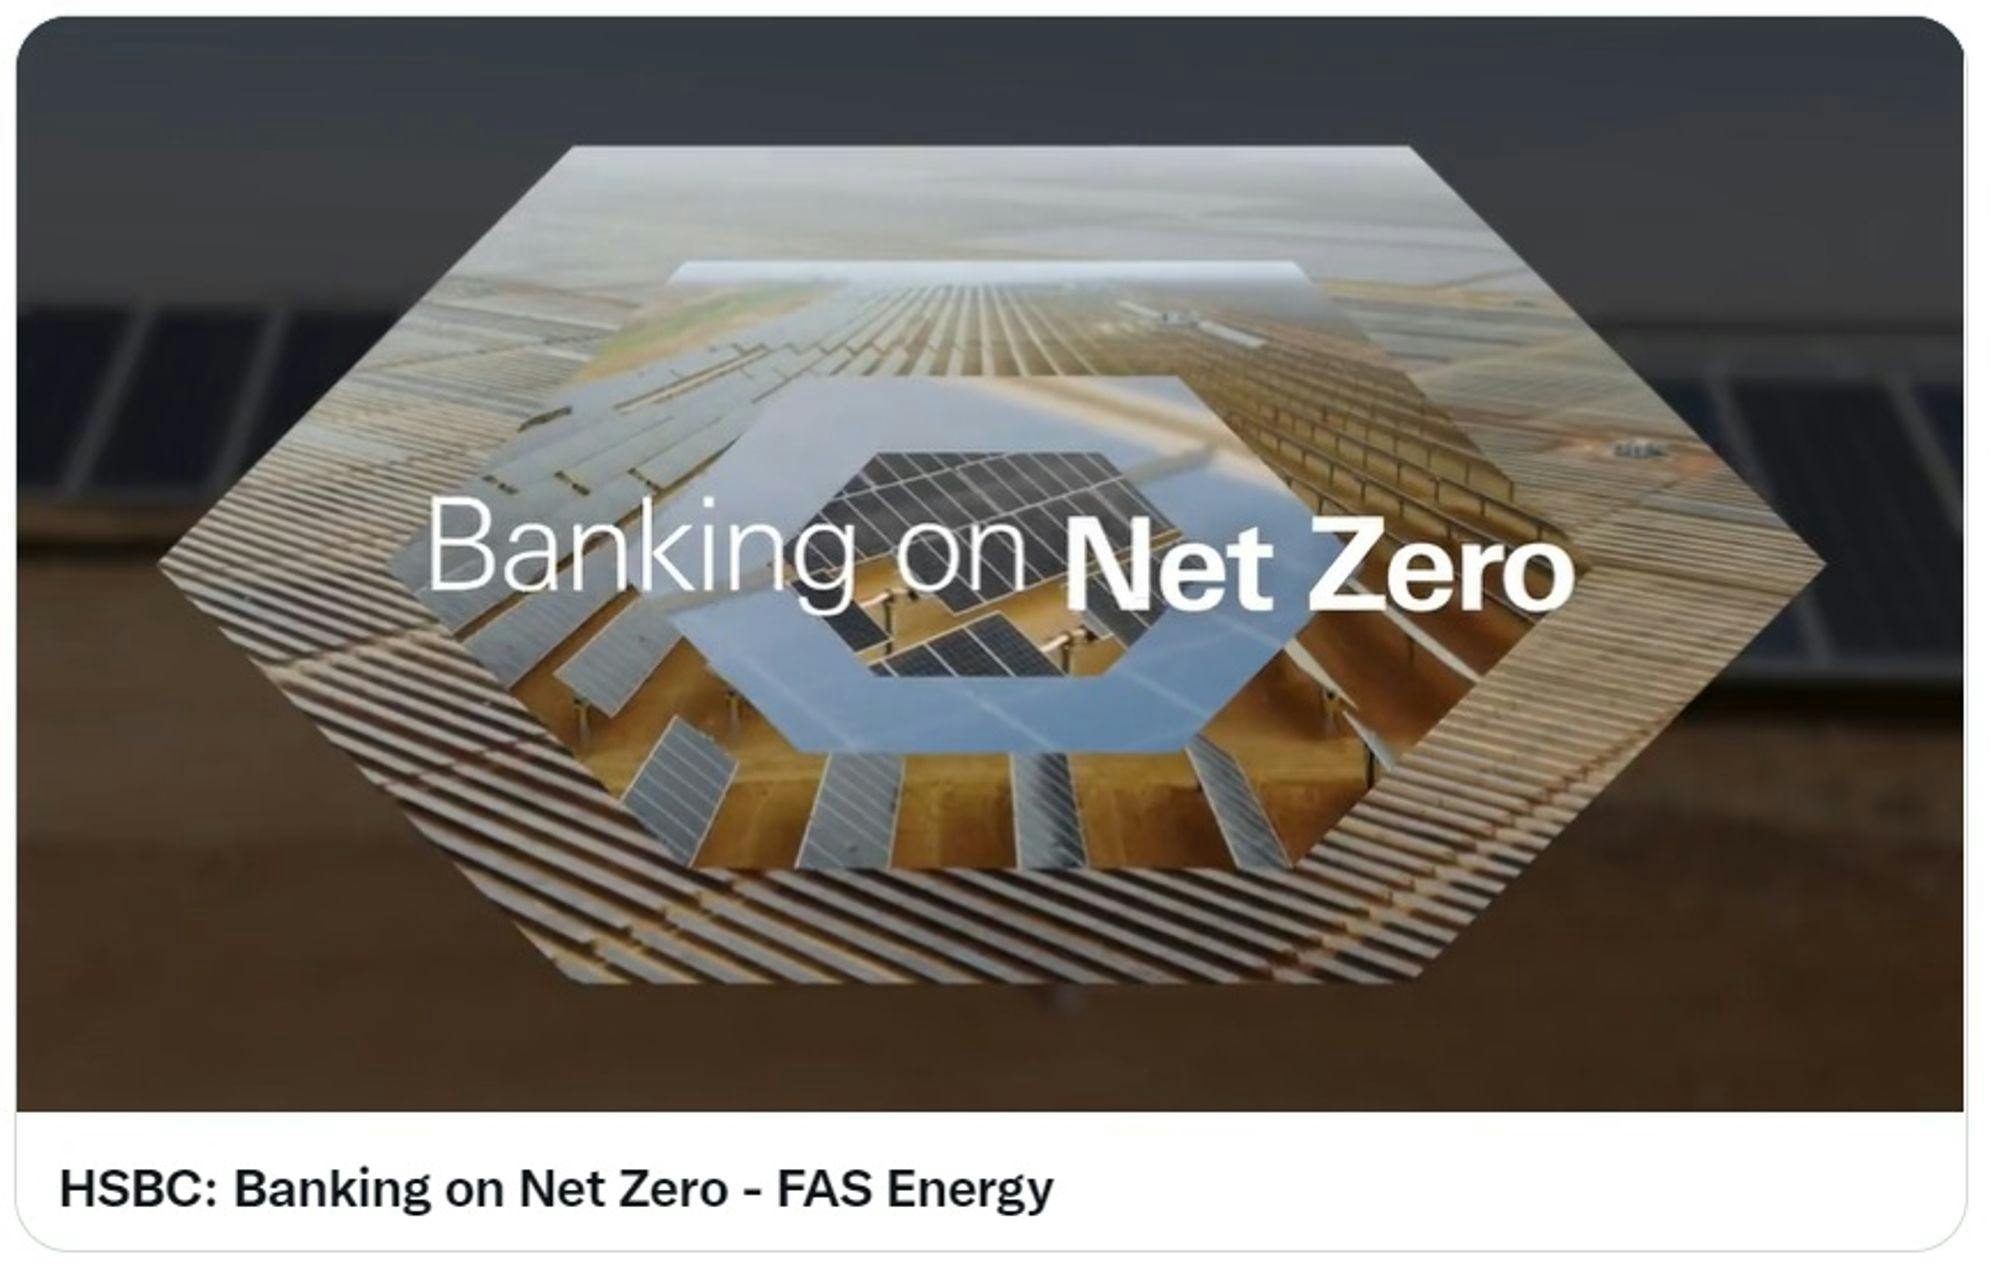 Video stil showing "Banking on Net Zero"